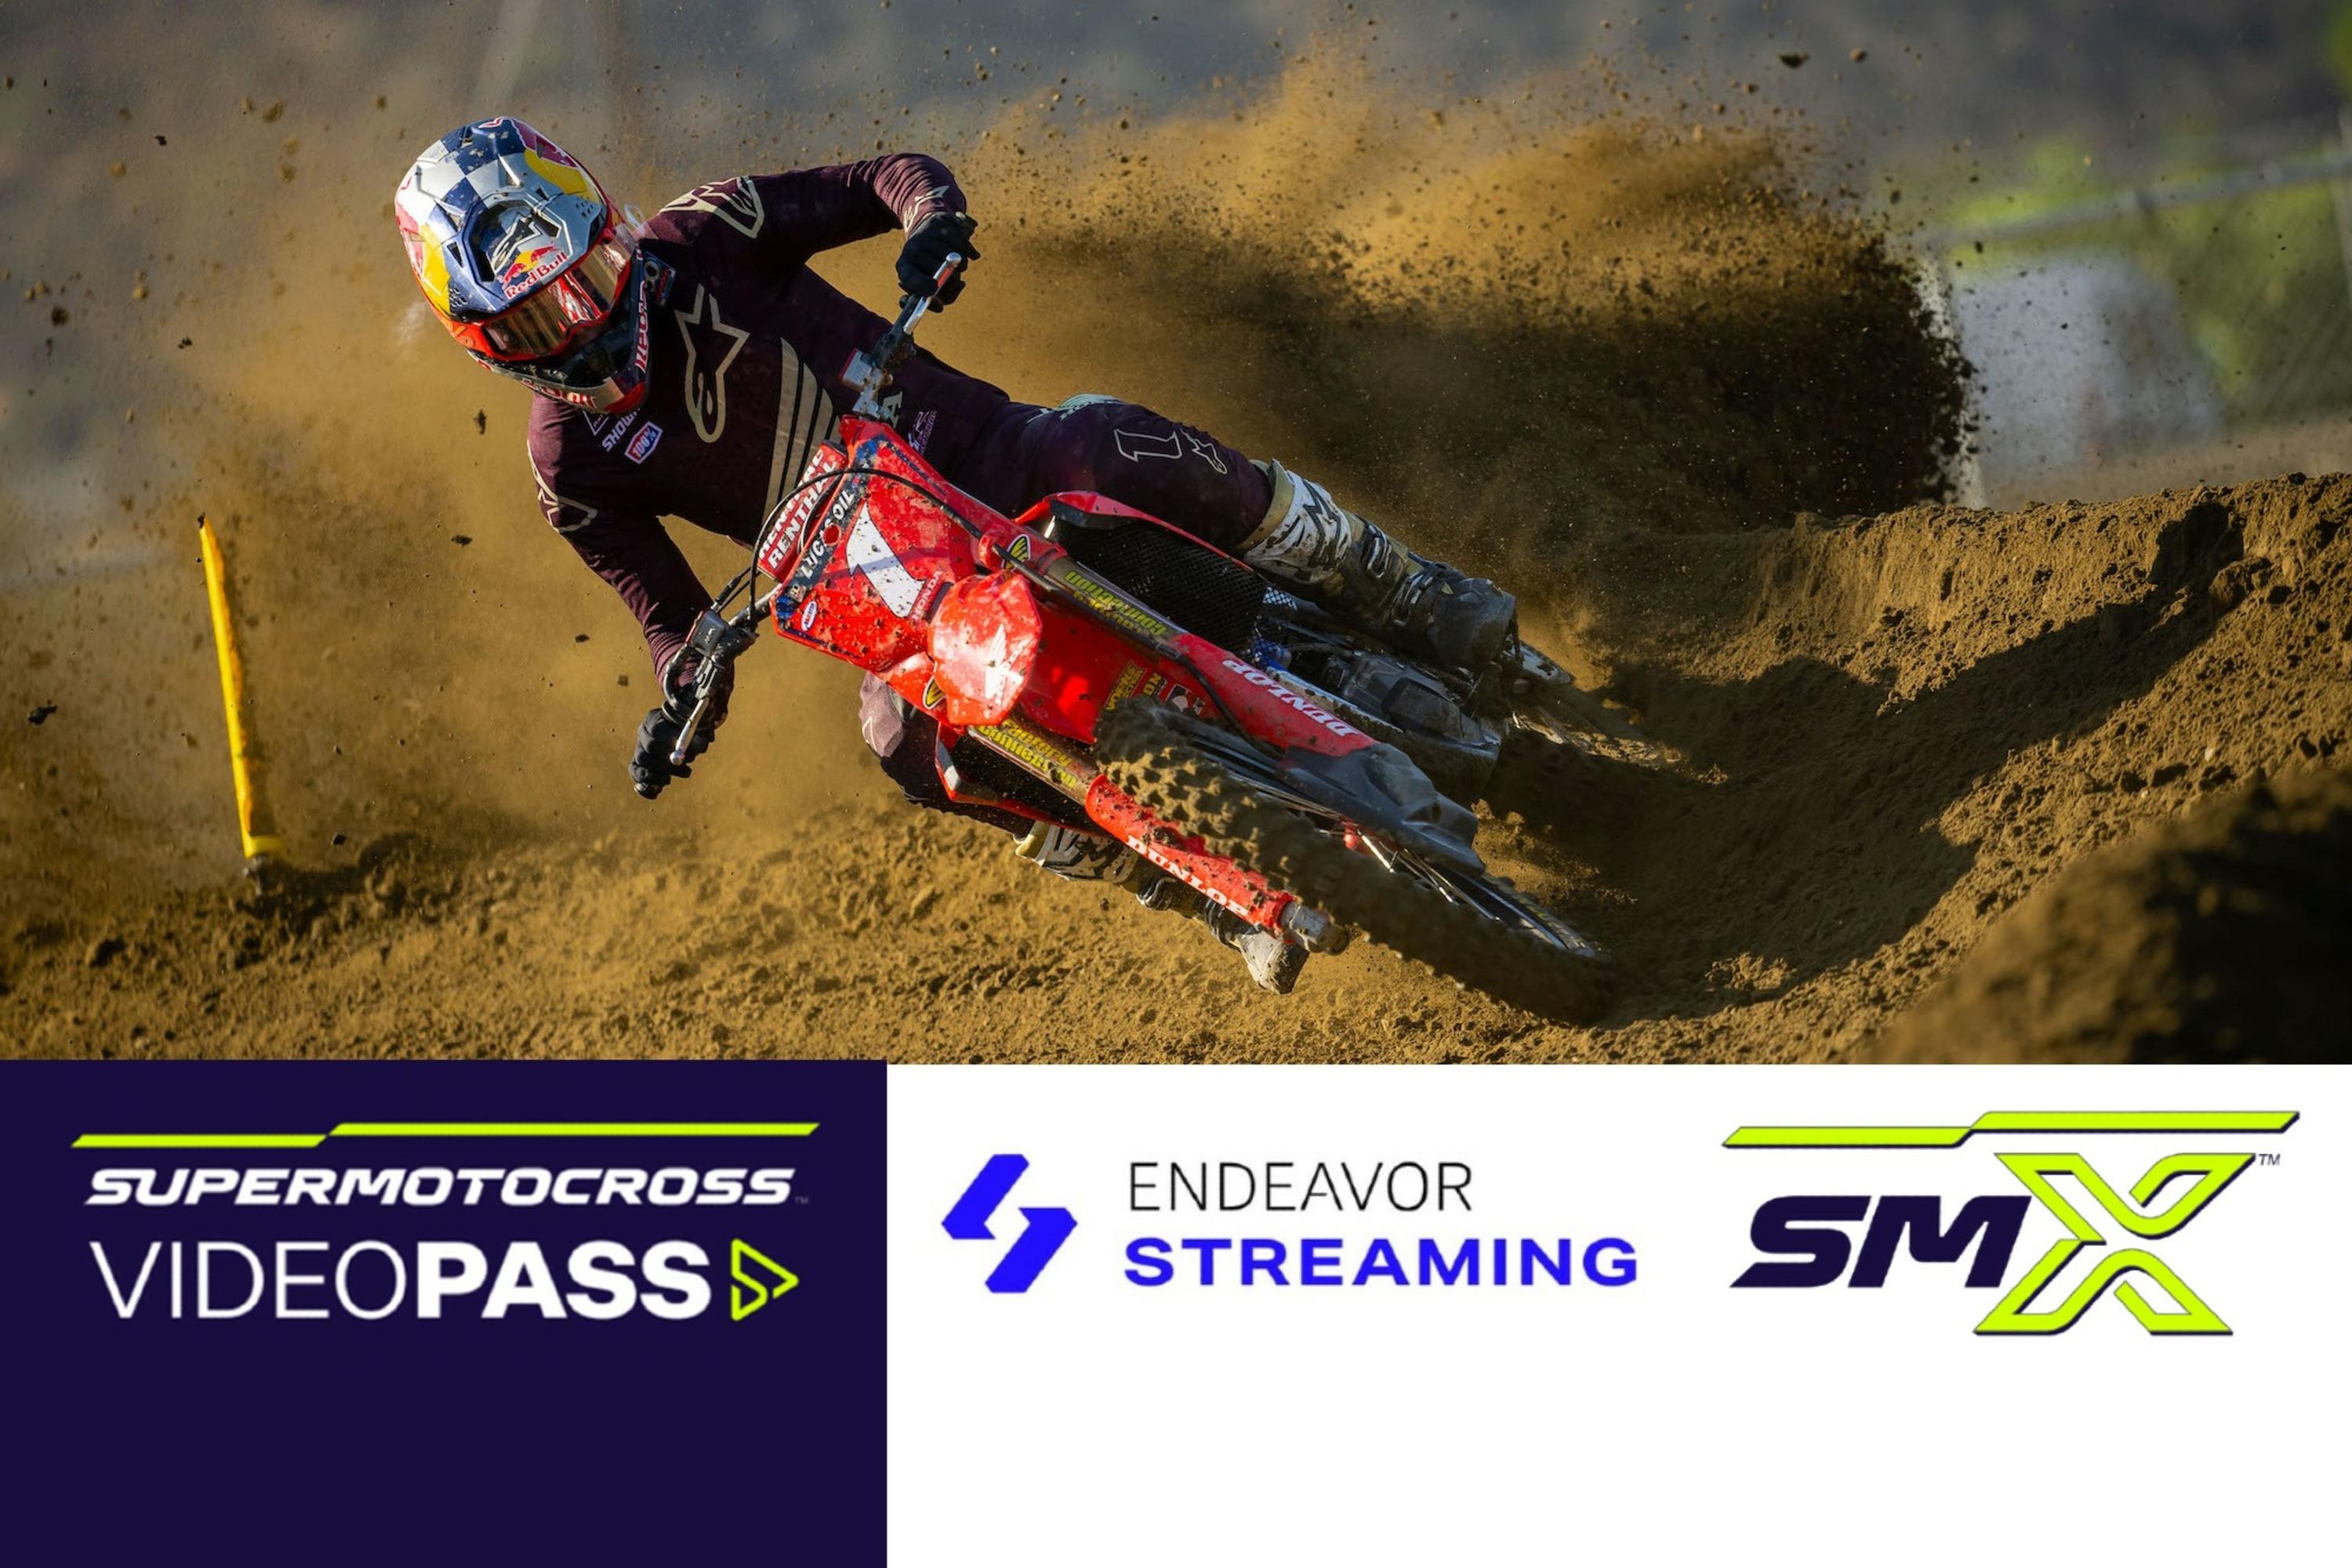 SuperMotocross Video Pass for International Viewers